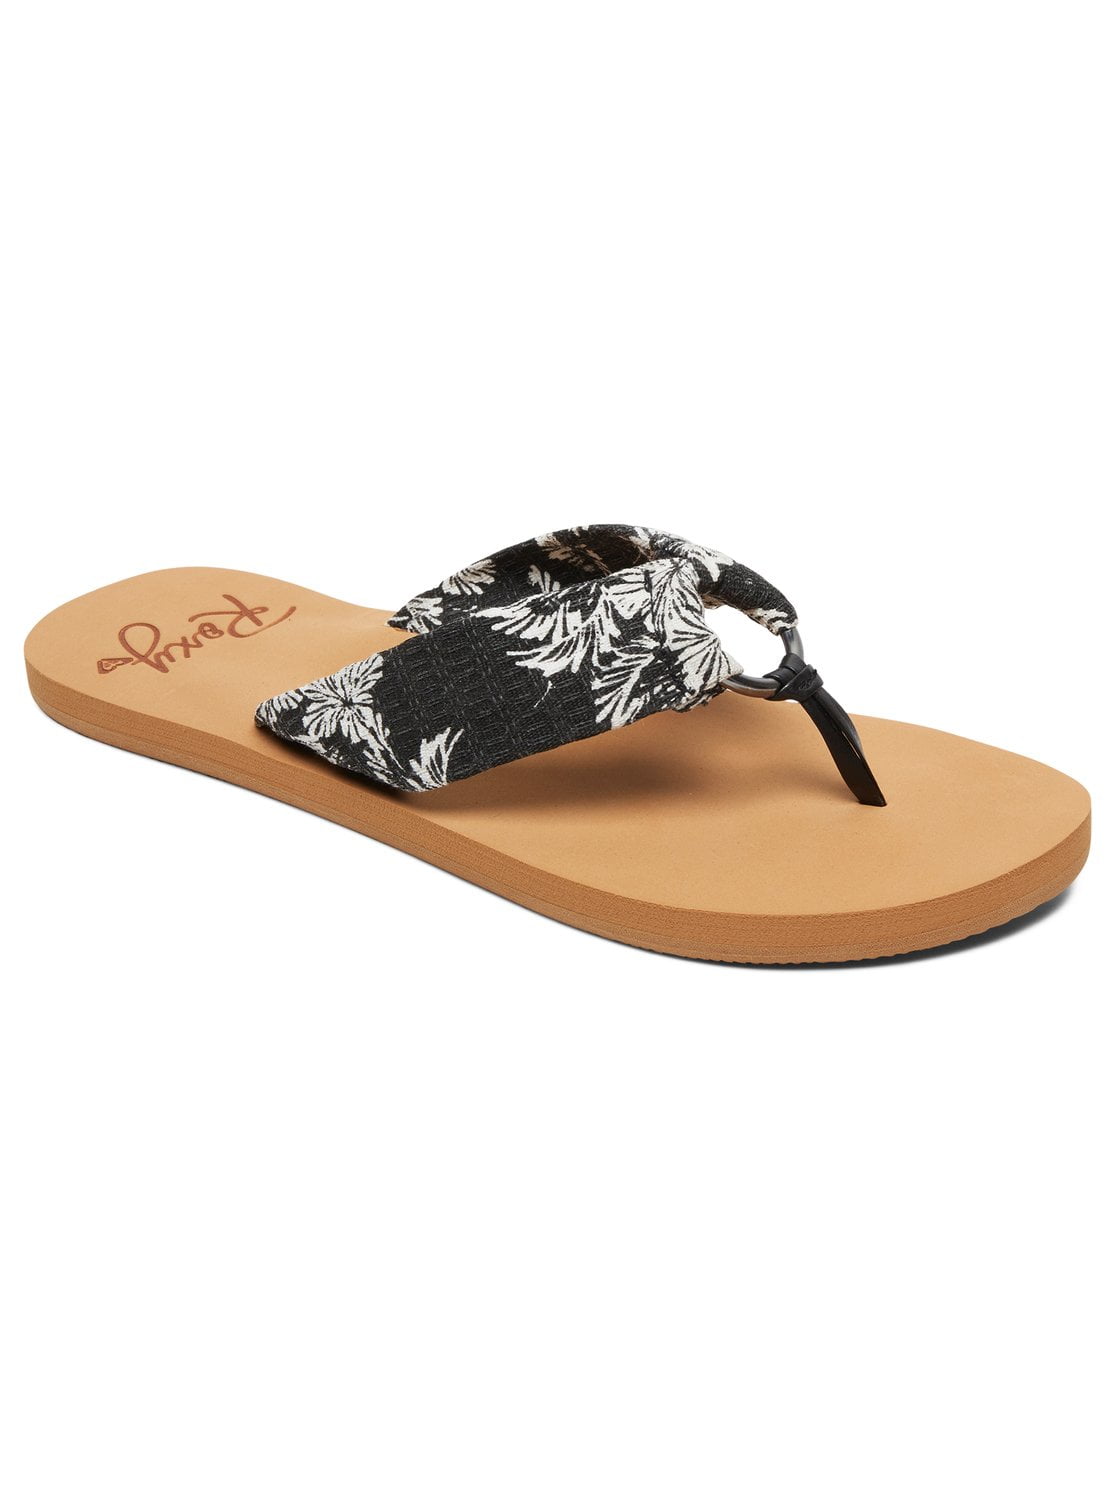 Roxy Womens Paia III Casual Thong Beach Sandals - Black/White - Walmart.com